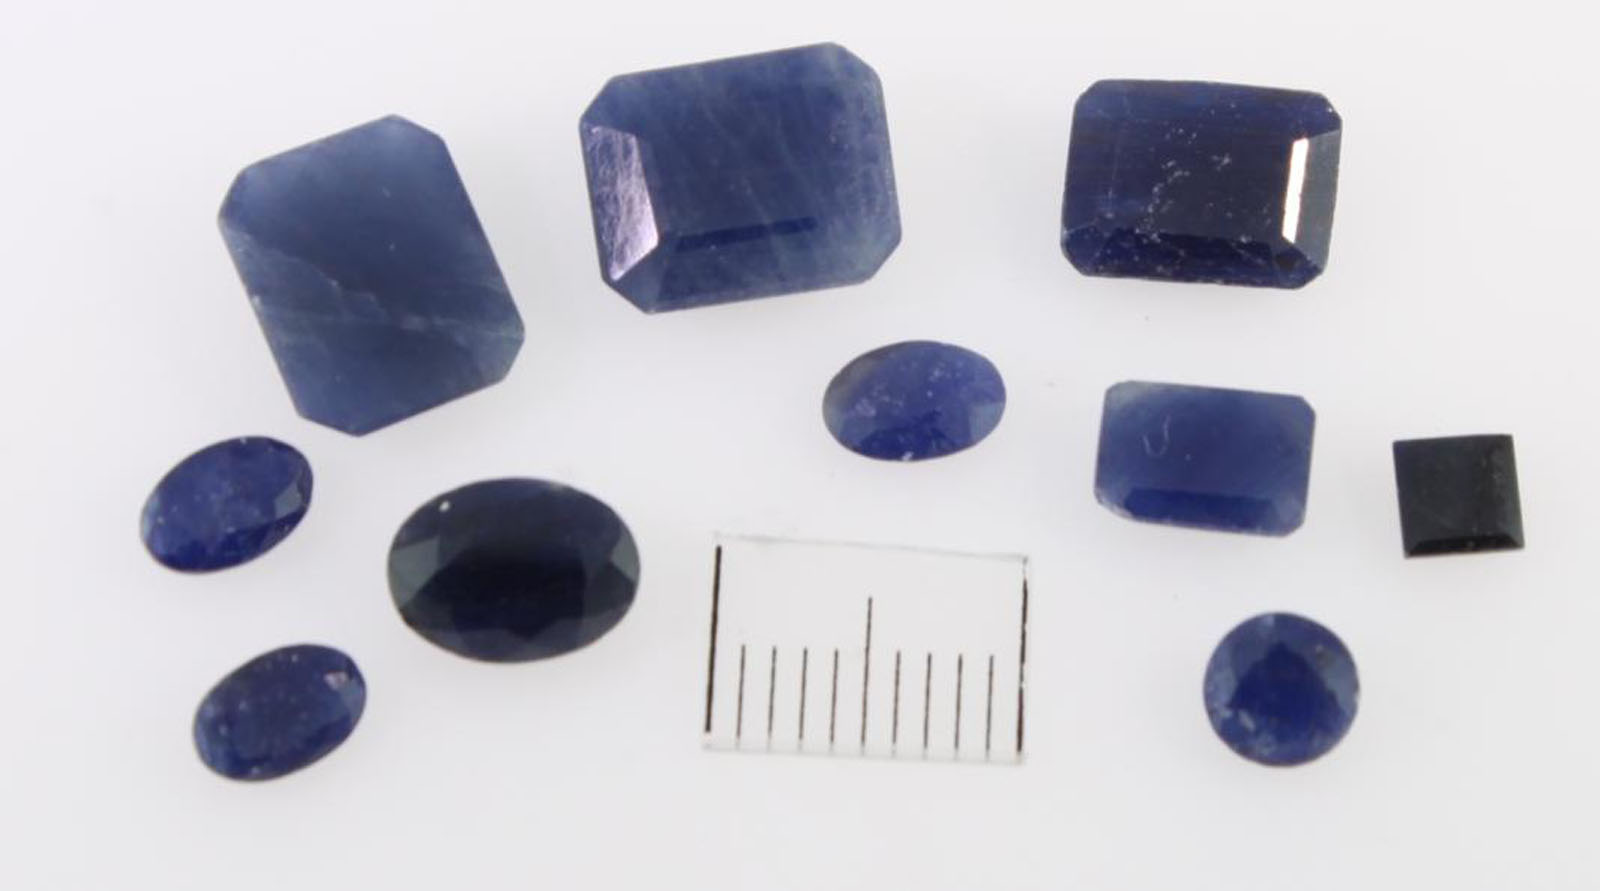 Sapphire precious stone - Jewelry stones